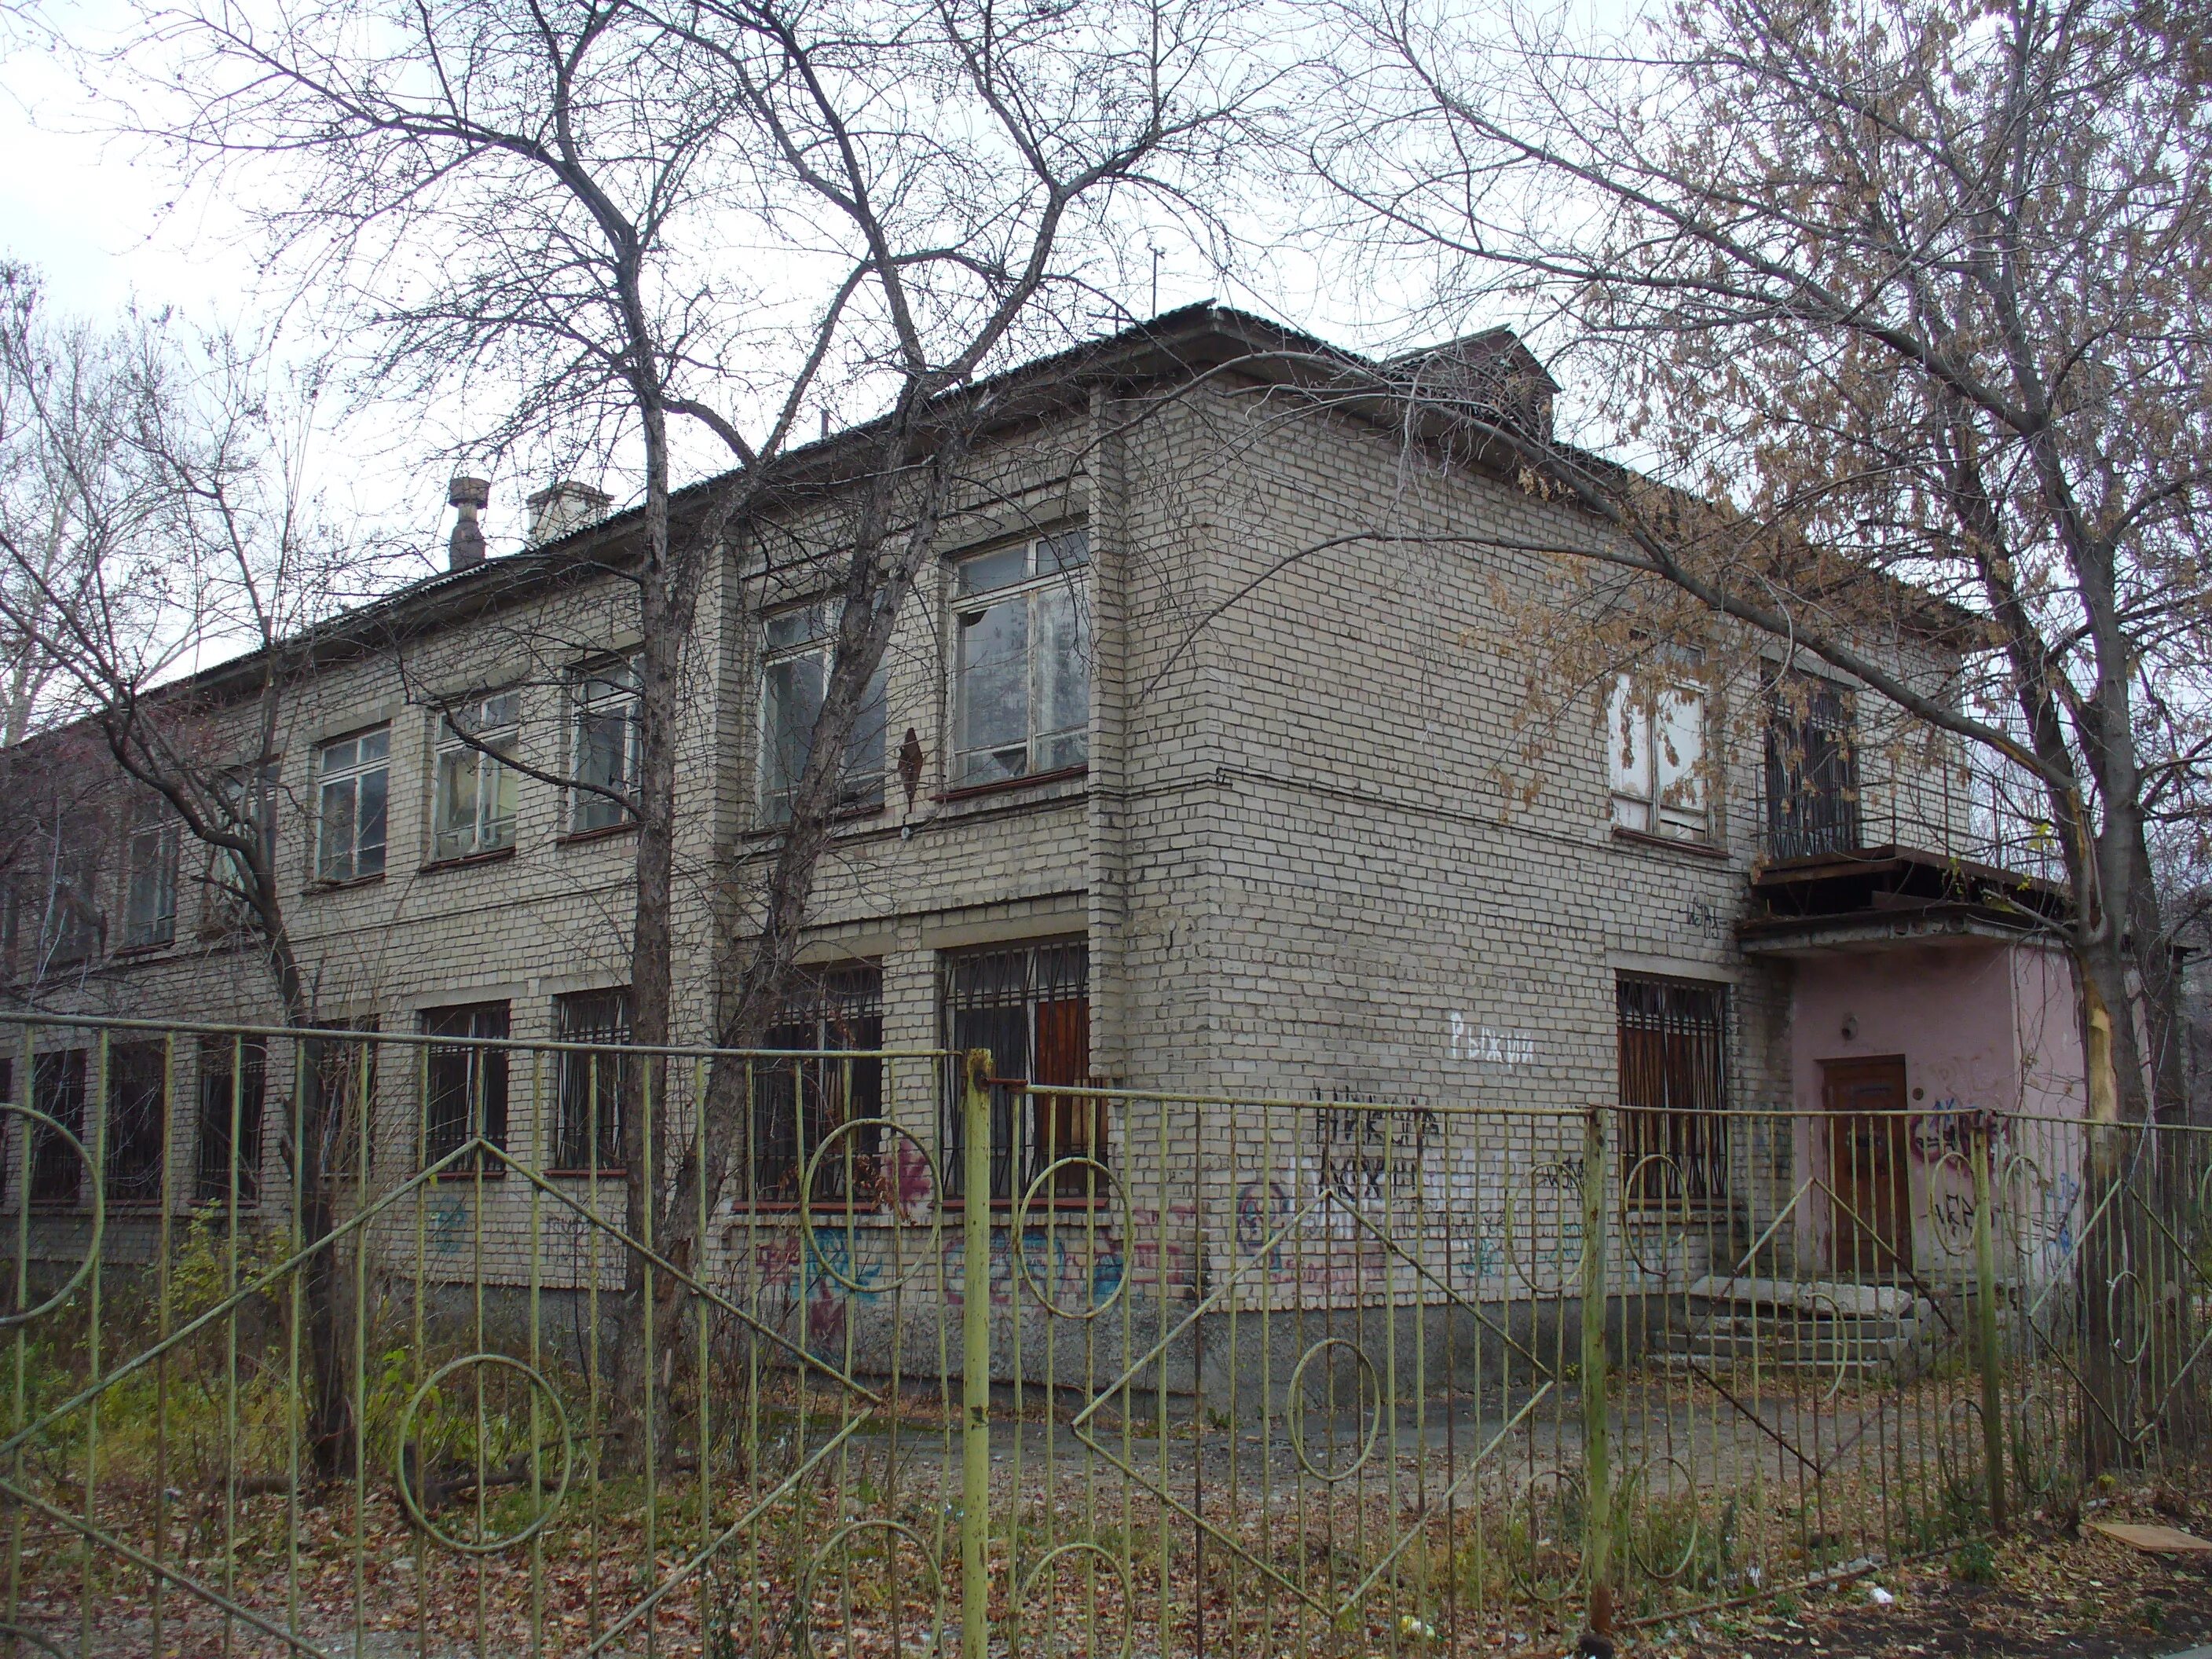 Детский сад 332 Екатеринбург. Старый детский сад. Старые детские сады. Детский сад здание старое.